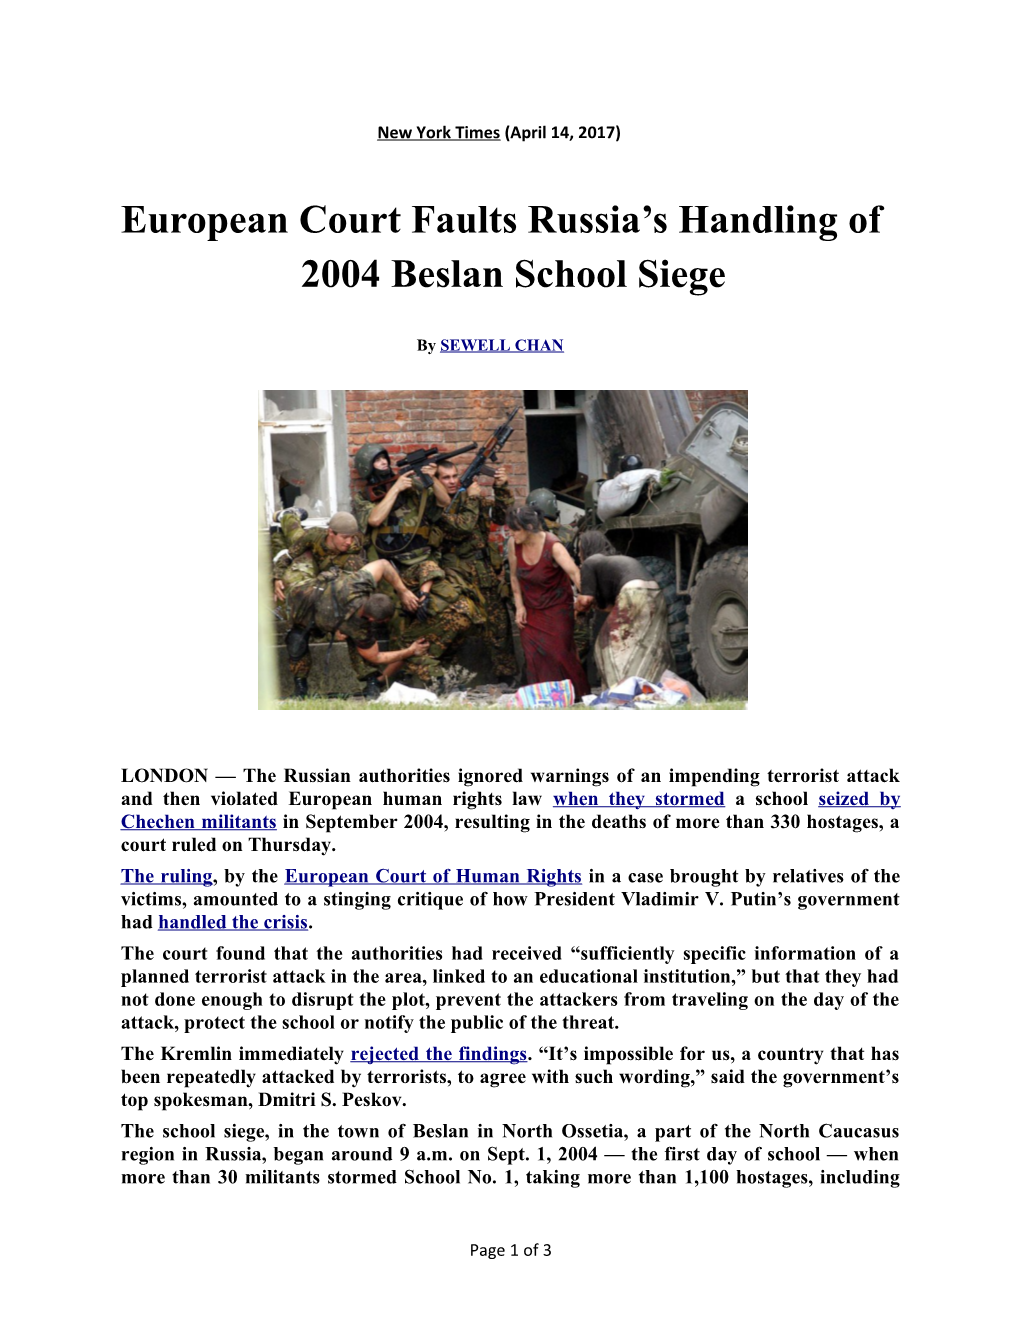 European Court Faults Russia S Handling Of